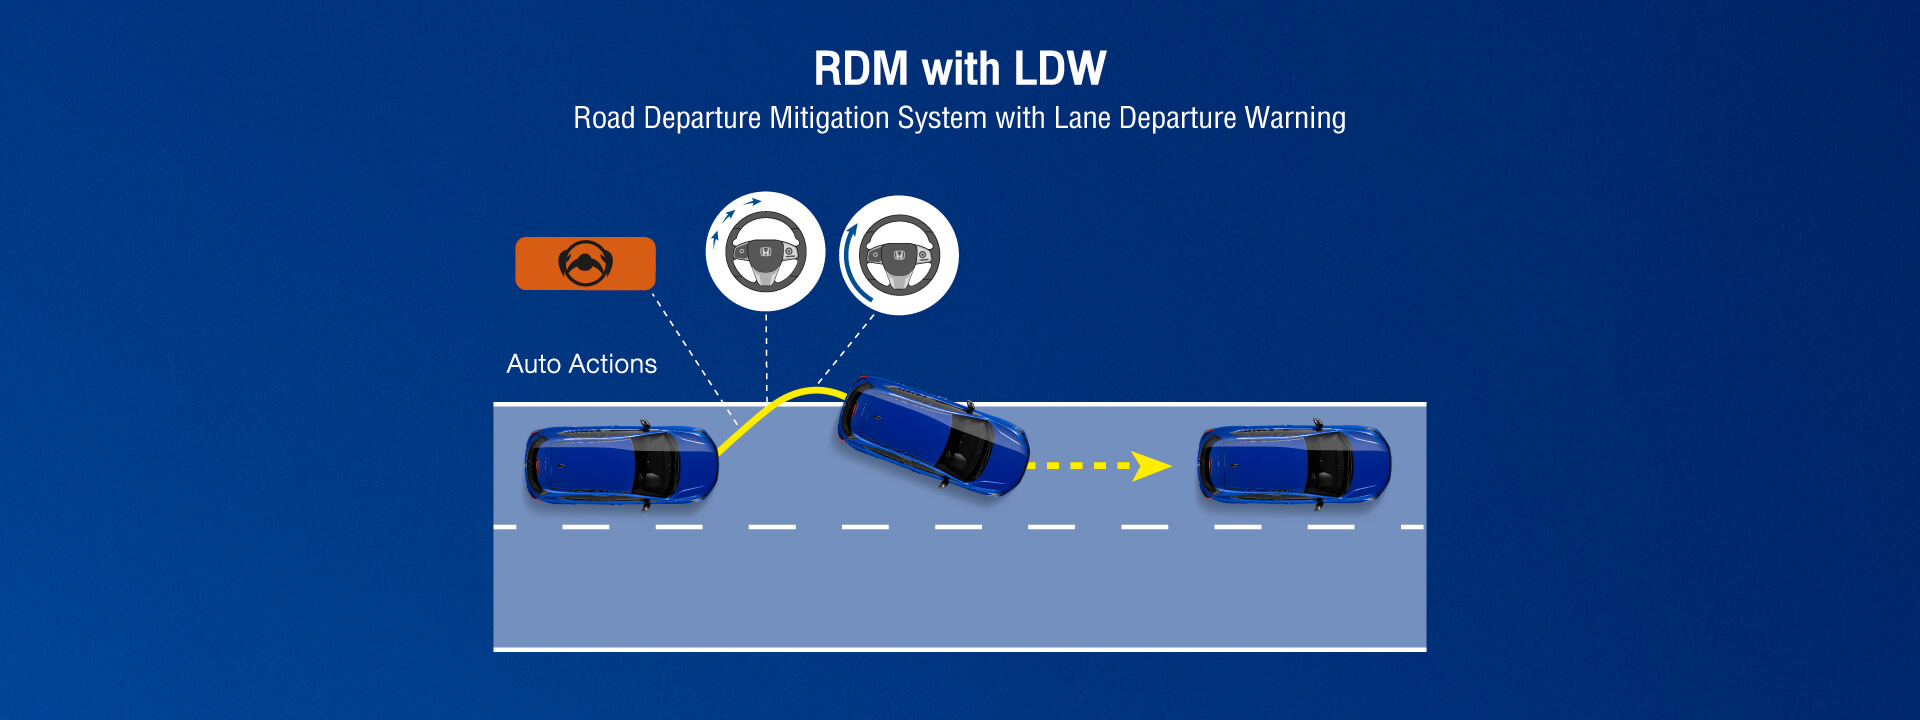 Road Departure Mitigation System with Lane Departure Warning (RAM with LDW) ระบบเตือนและช่วยควบคุม เมื่อรถออกนอกช่องทางเดินรถ